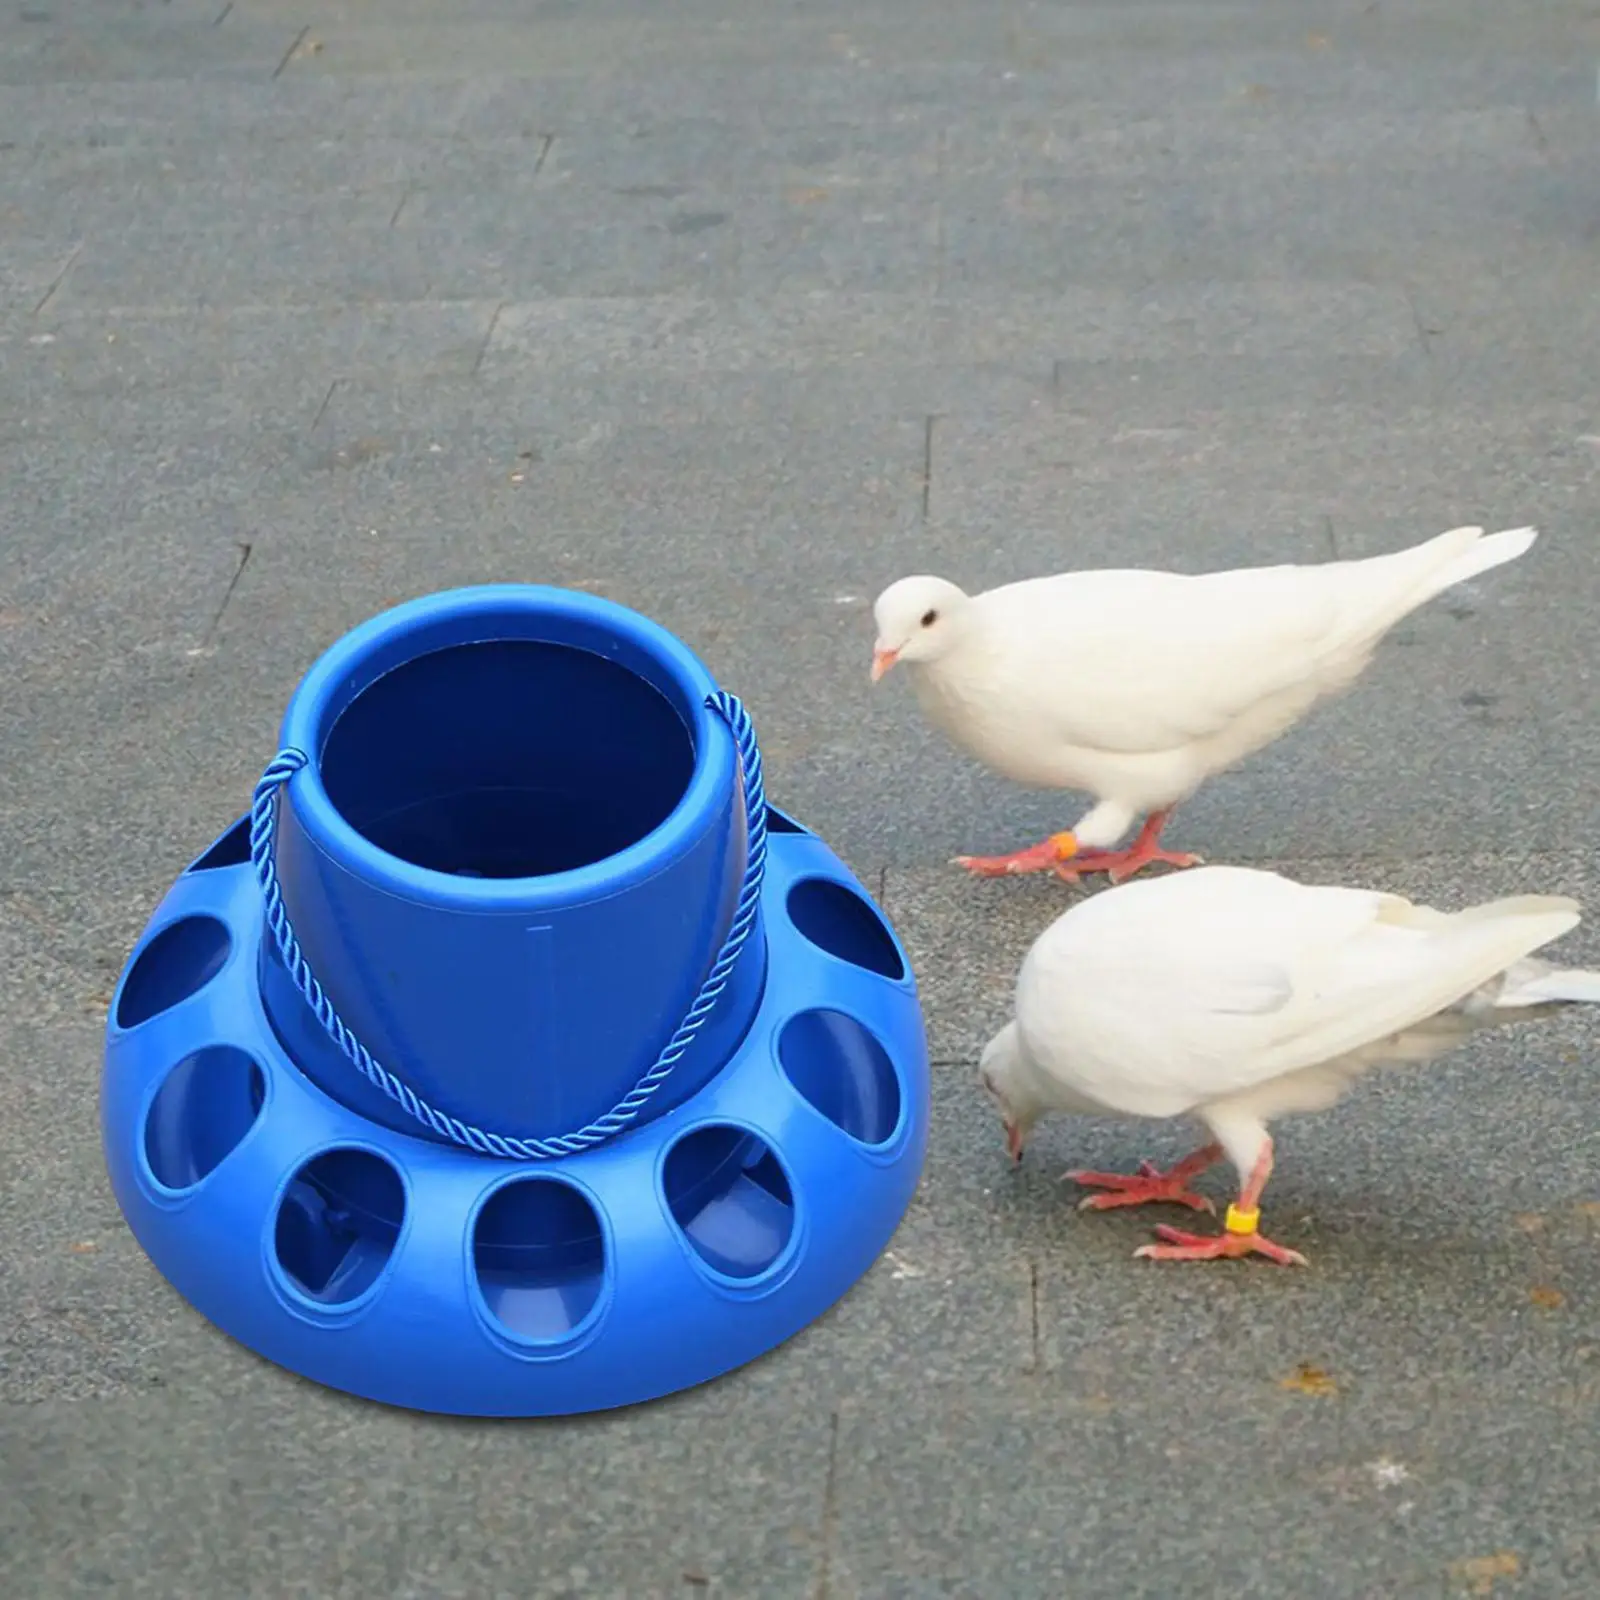 Chicken Feeder Automatic Bird Feeding Bucket Food Dispenser 11 Holes Backyard for Hen Pigeon Budgie Geese Parrot